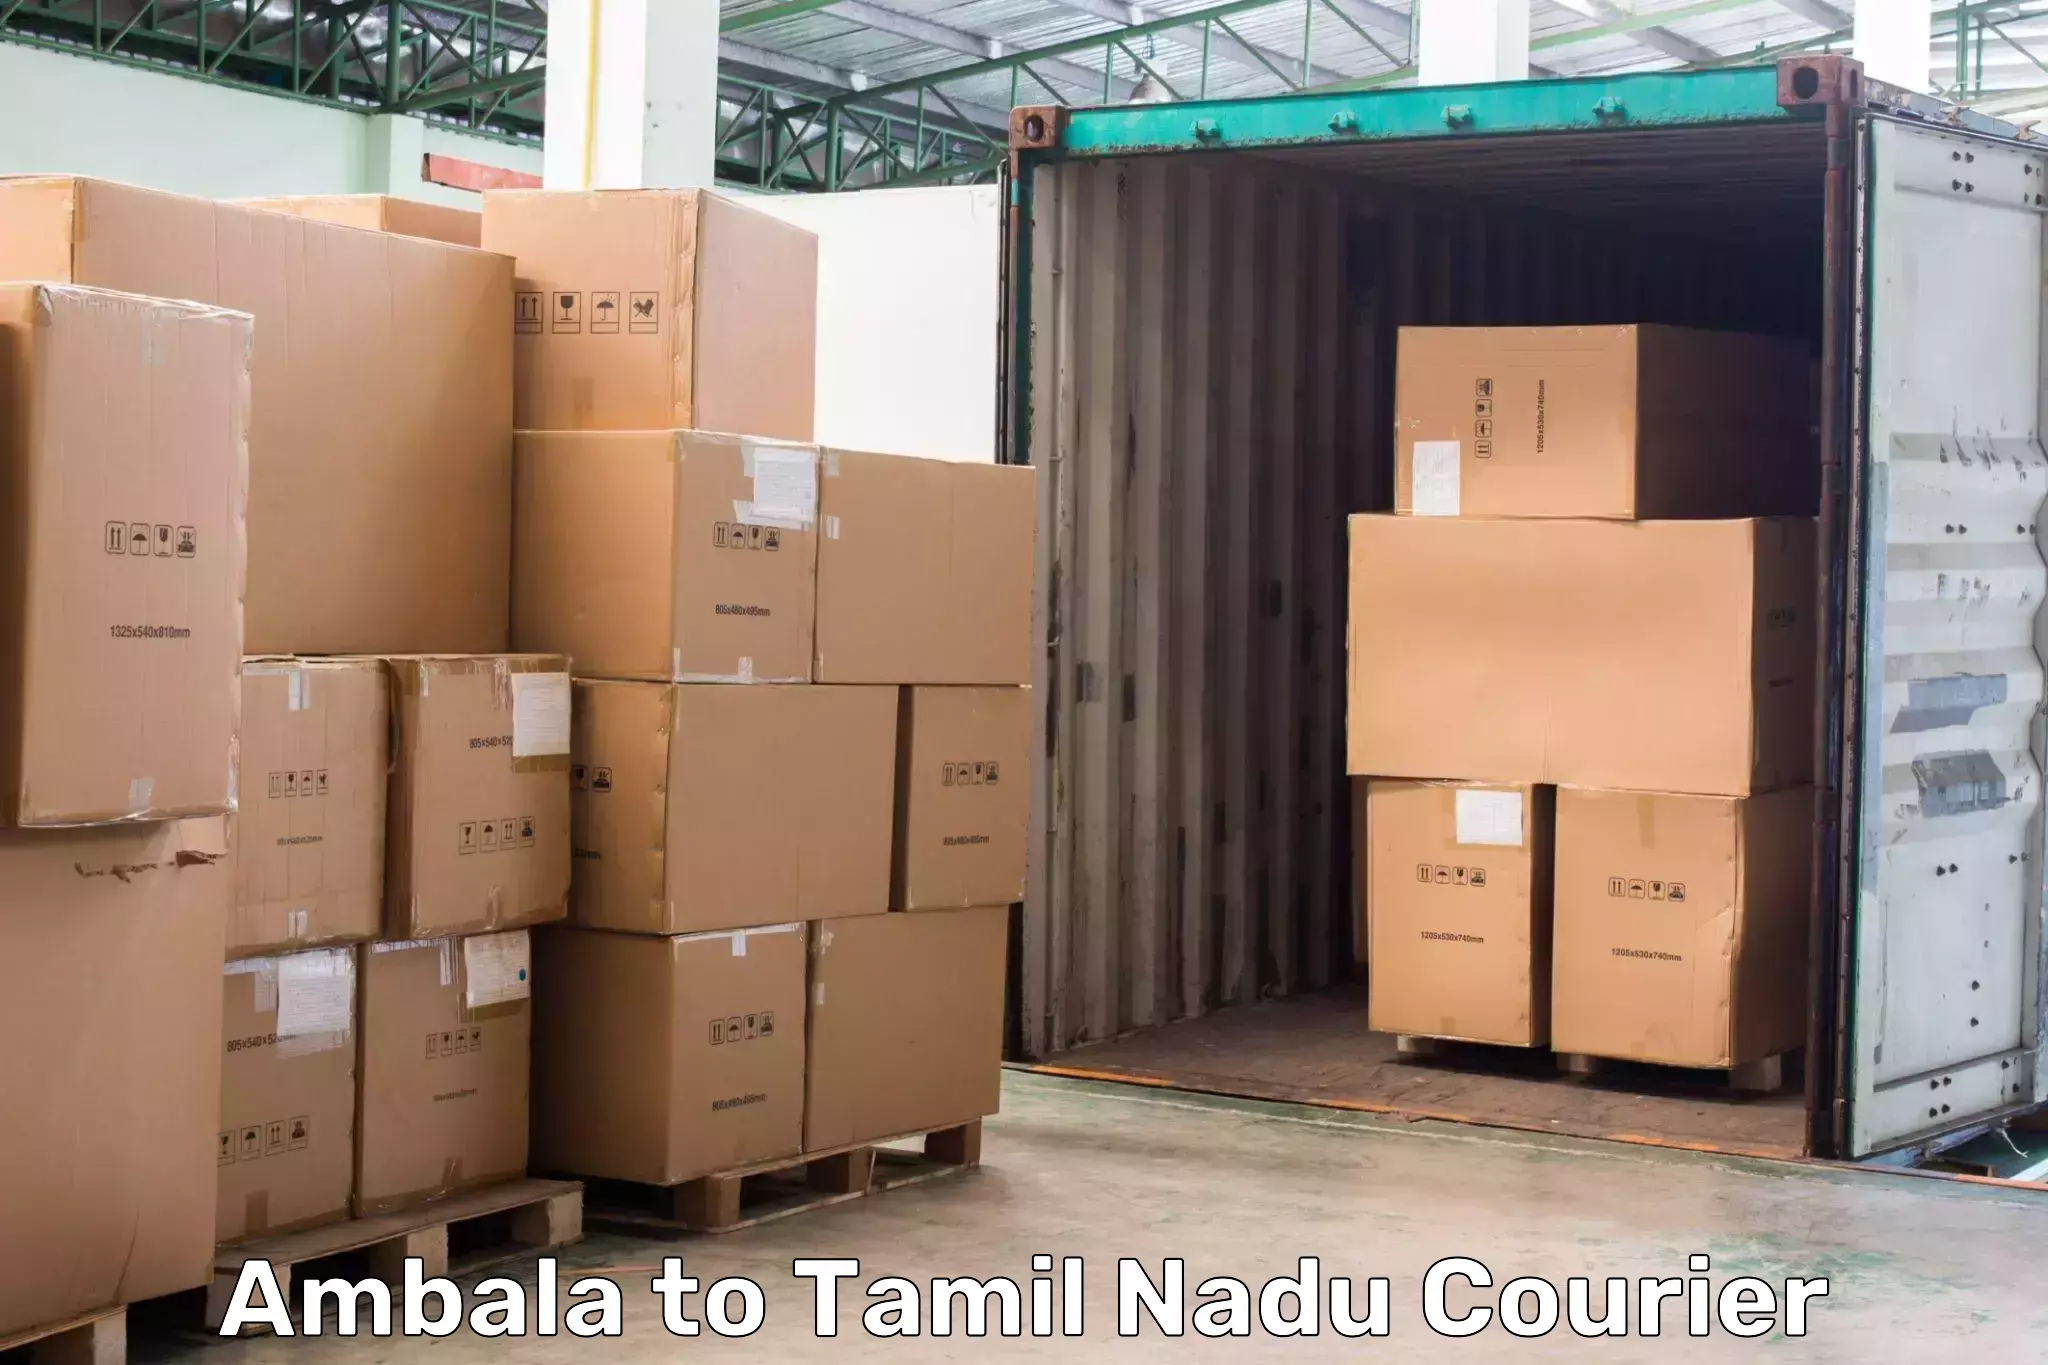 Global shipping networks Ambala to Coimbatore